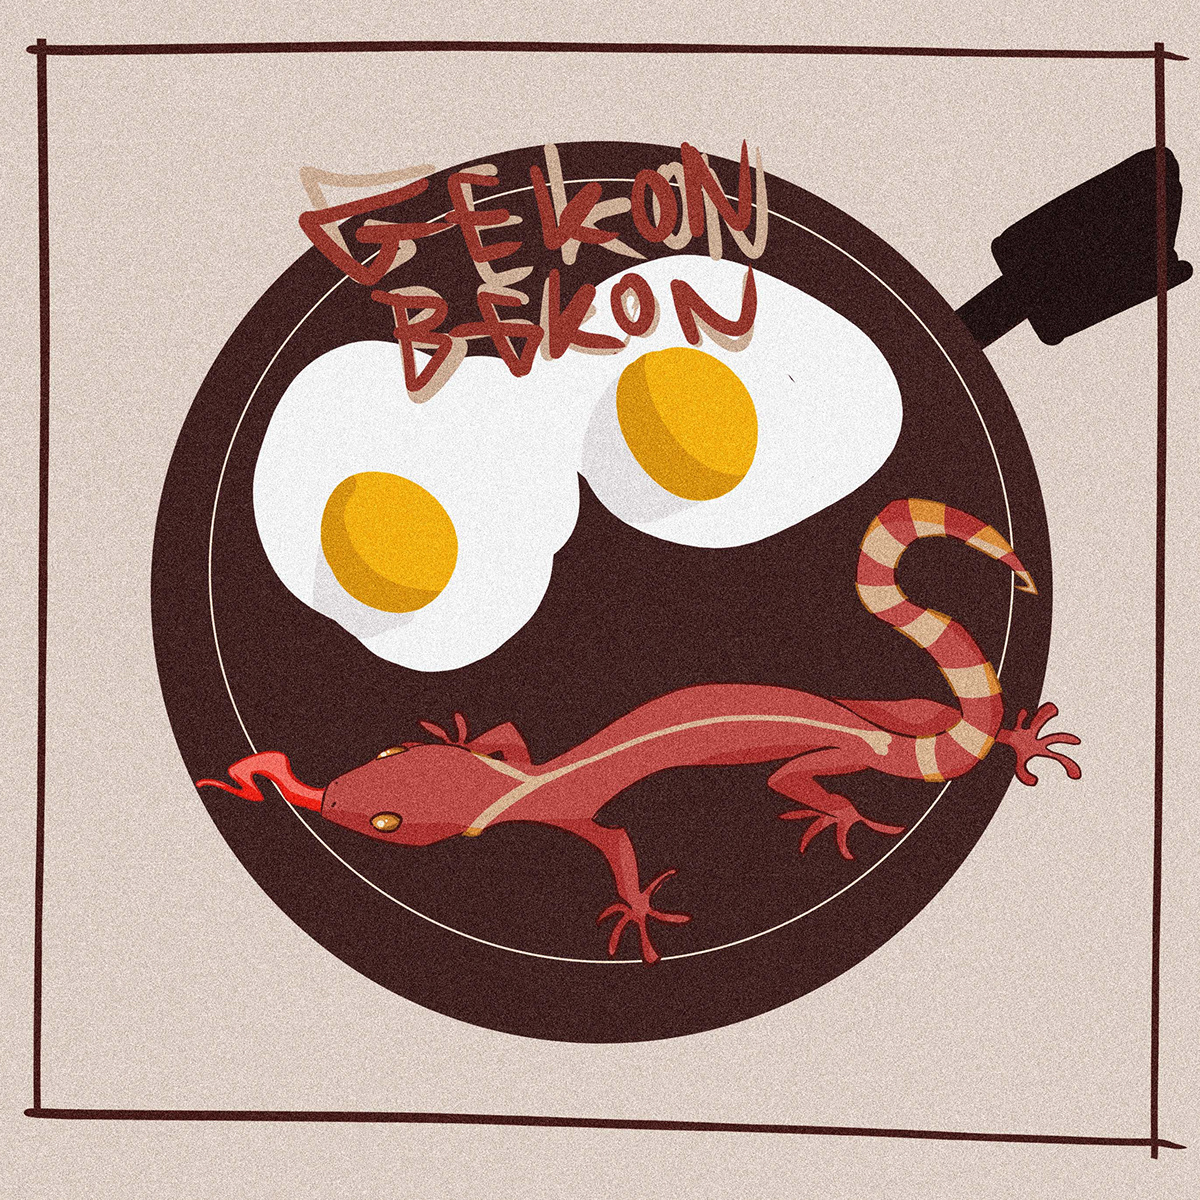 gekko animals cute Bekon sticks ilustracja ilustration logo